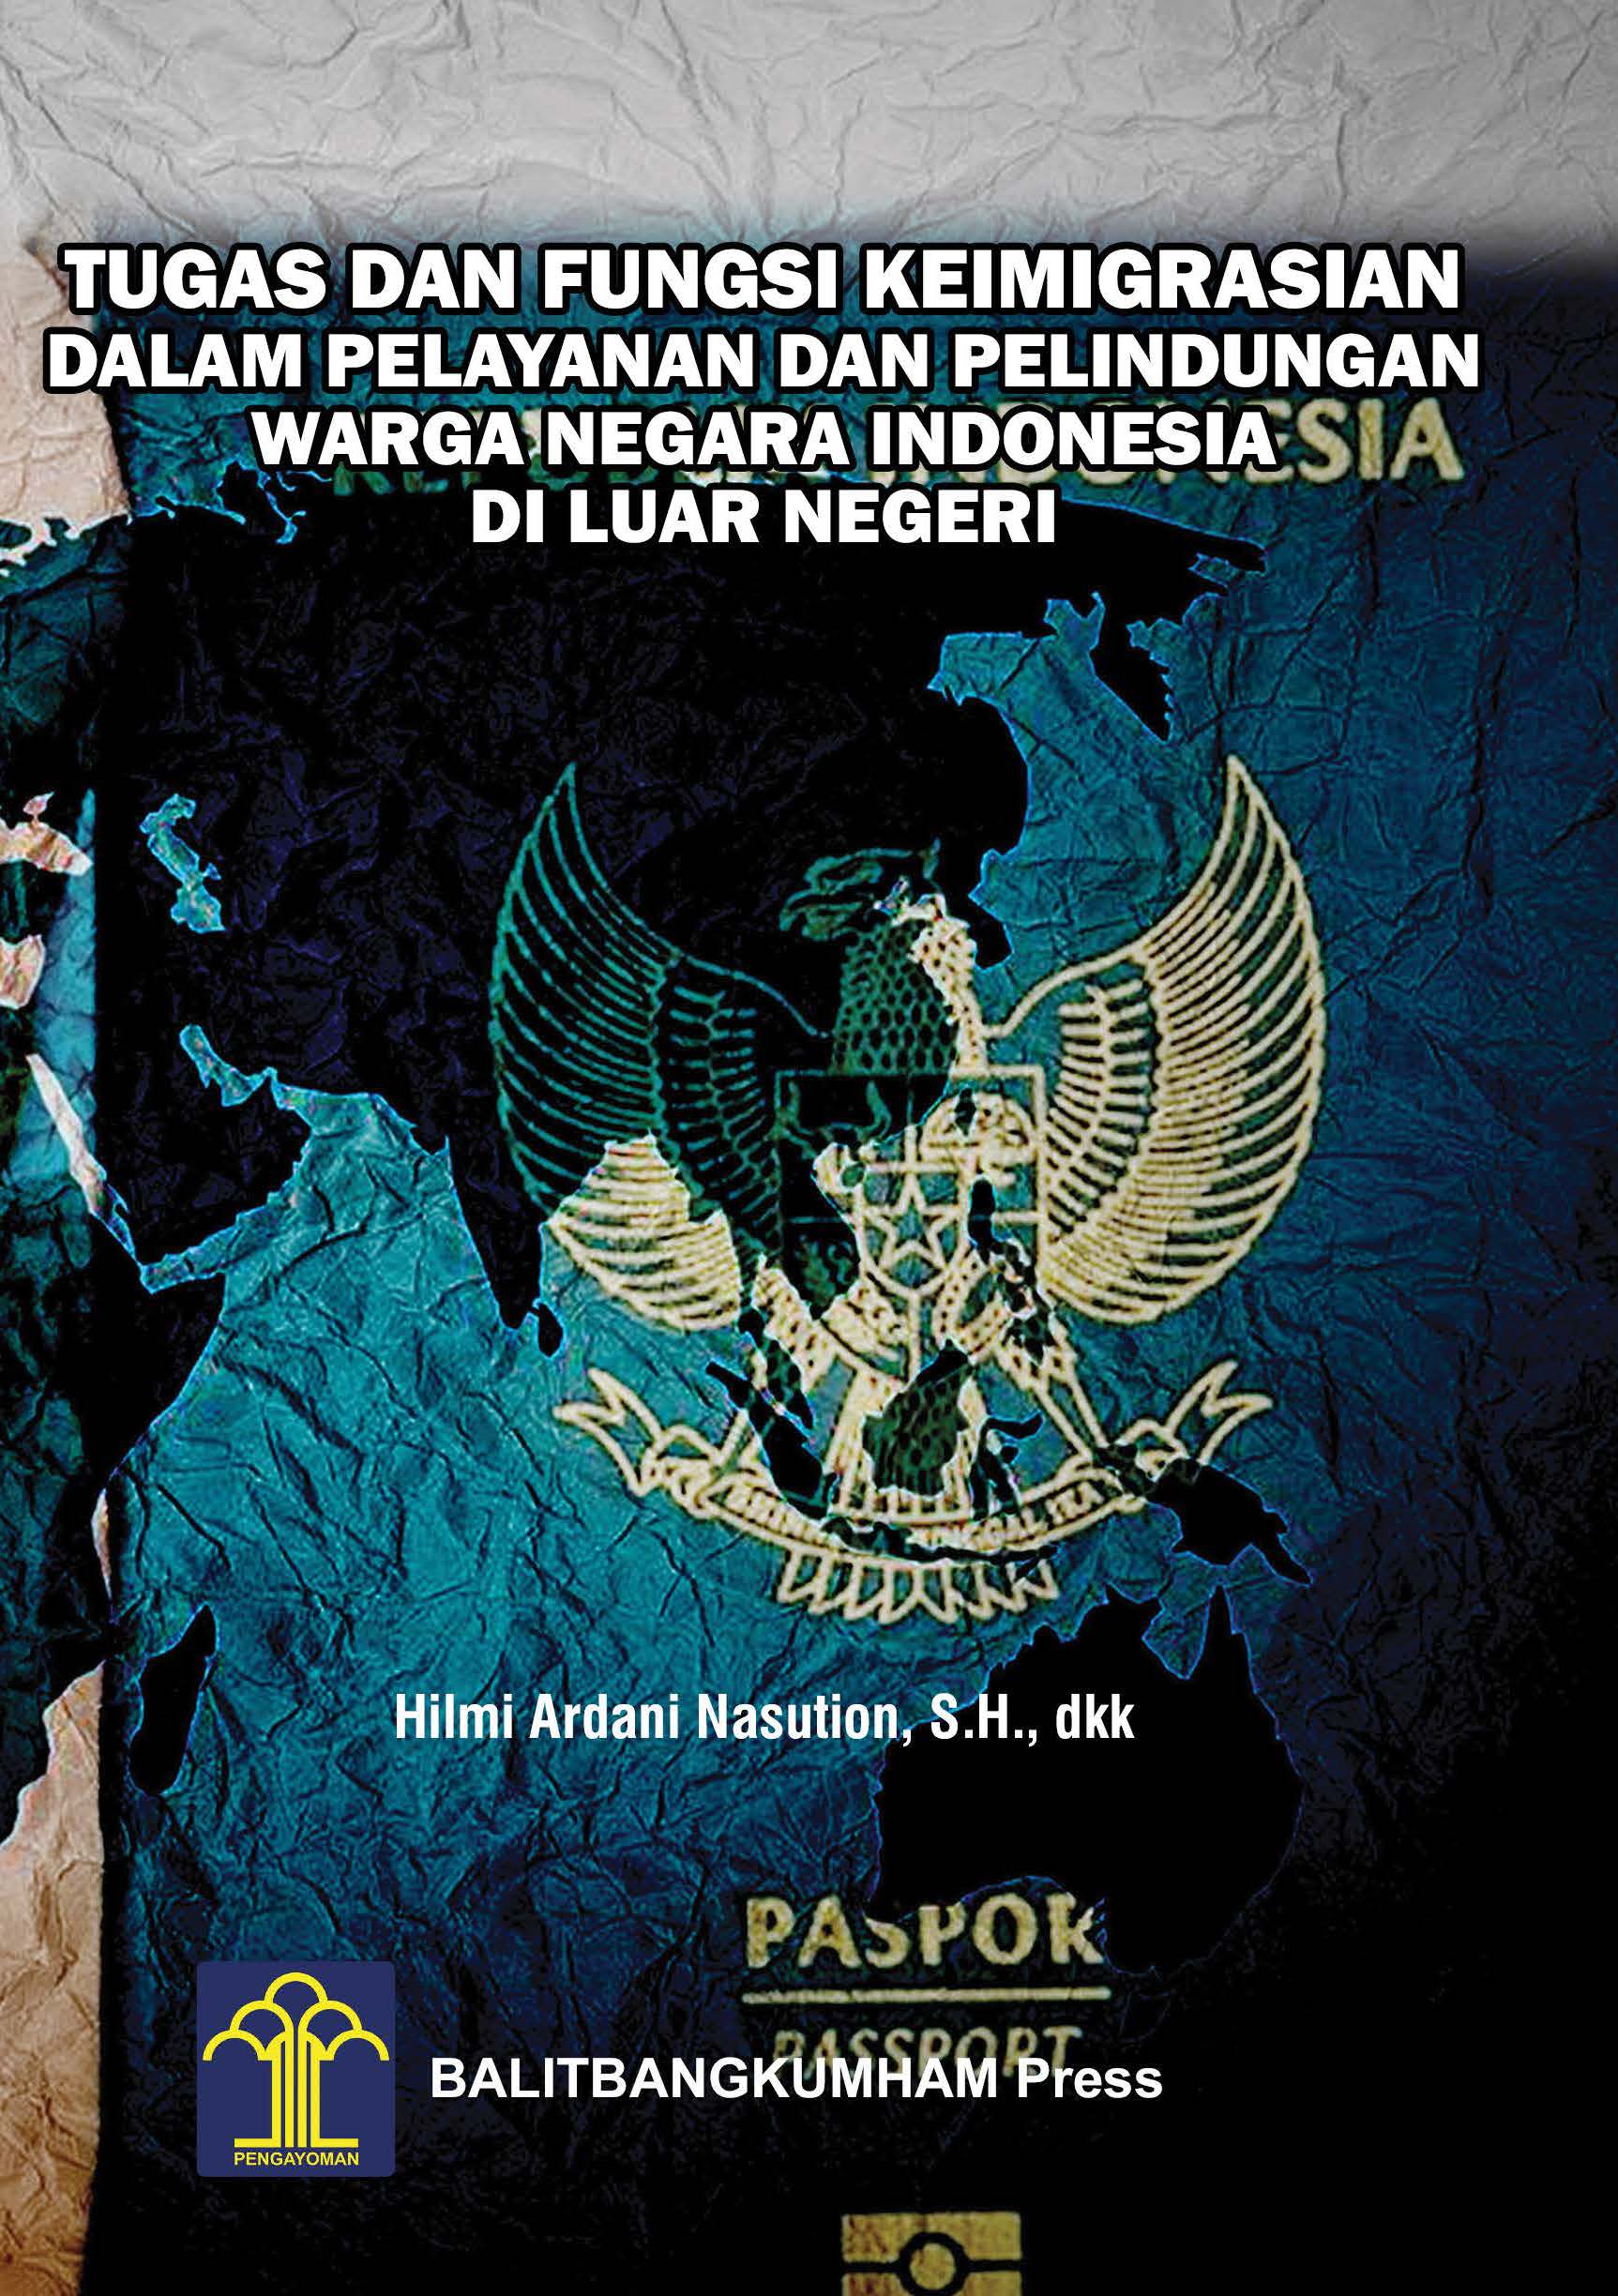 Tugas dan fungsi keimigrasian dalam pelayanan dan perlindungan warga negara Indonesia di luar negeri